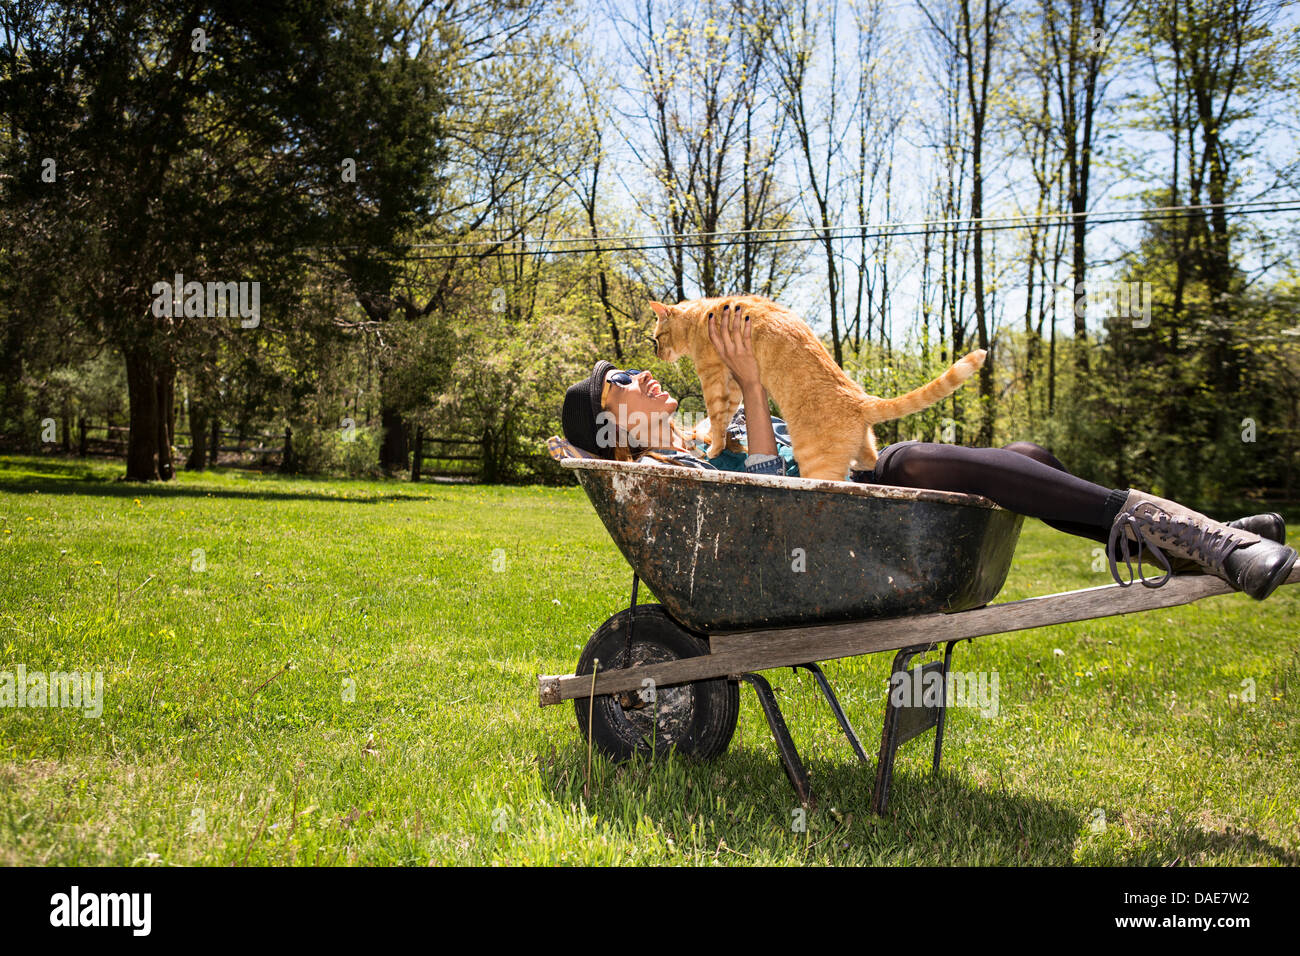 Woman in wheelbarrow holding ginger cat Stock Photo